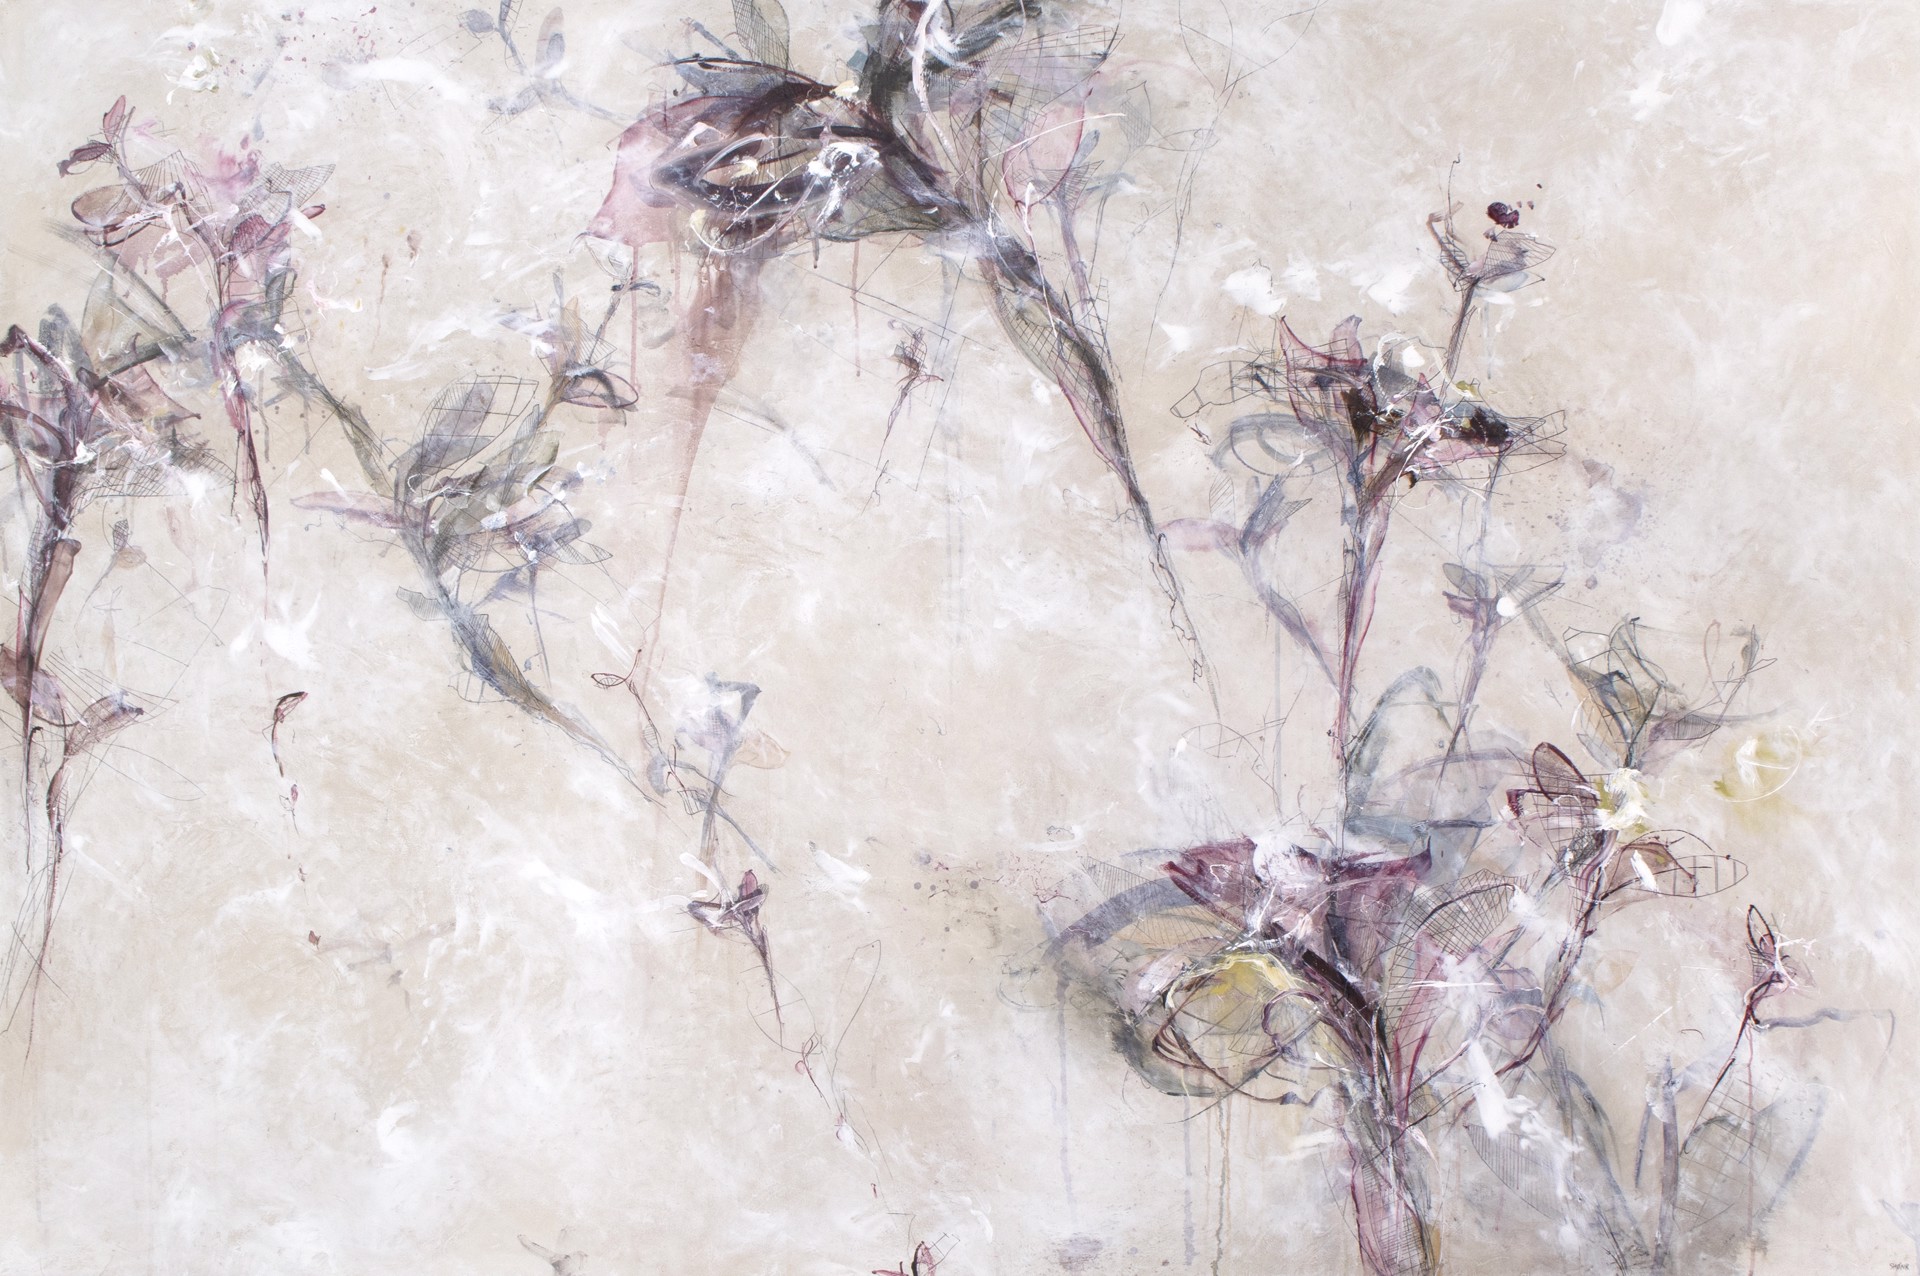 Blossom Murmuration by Bronson Shonk